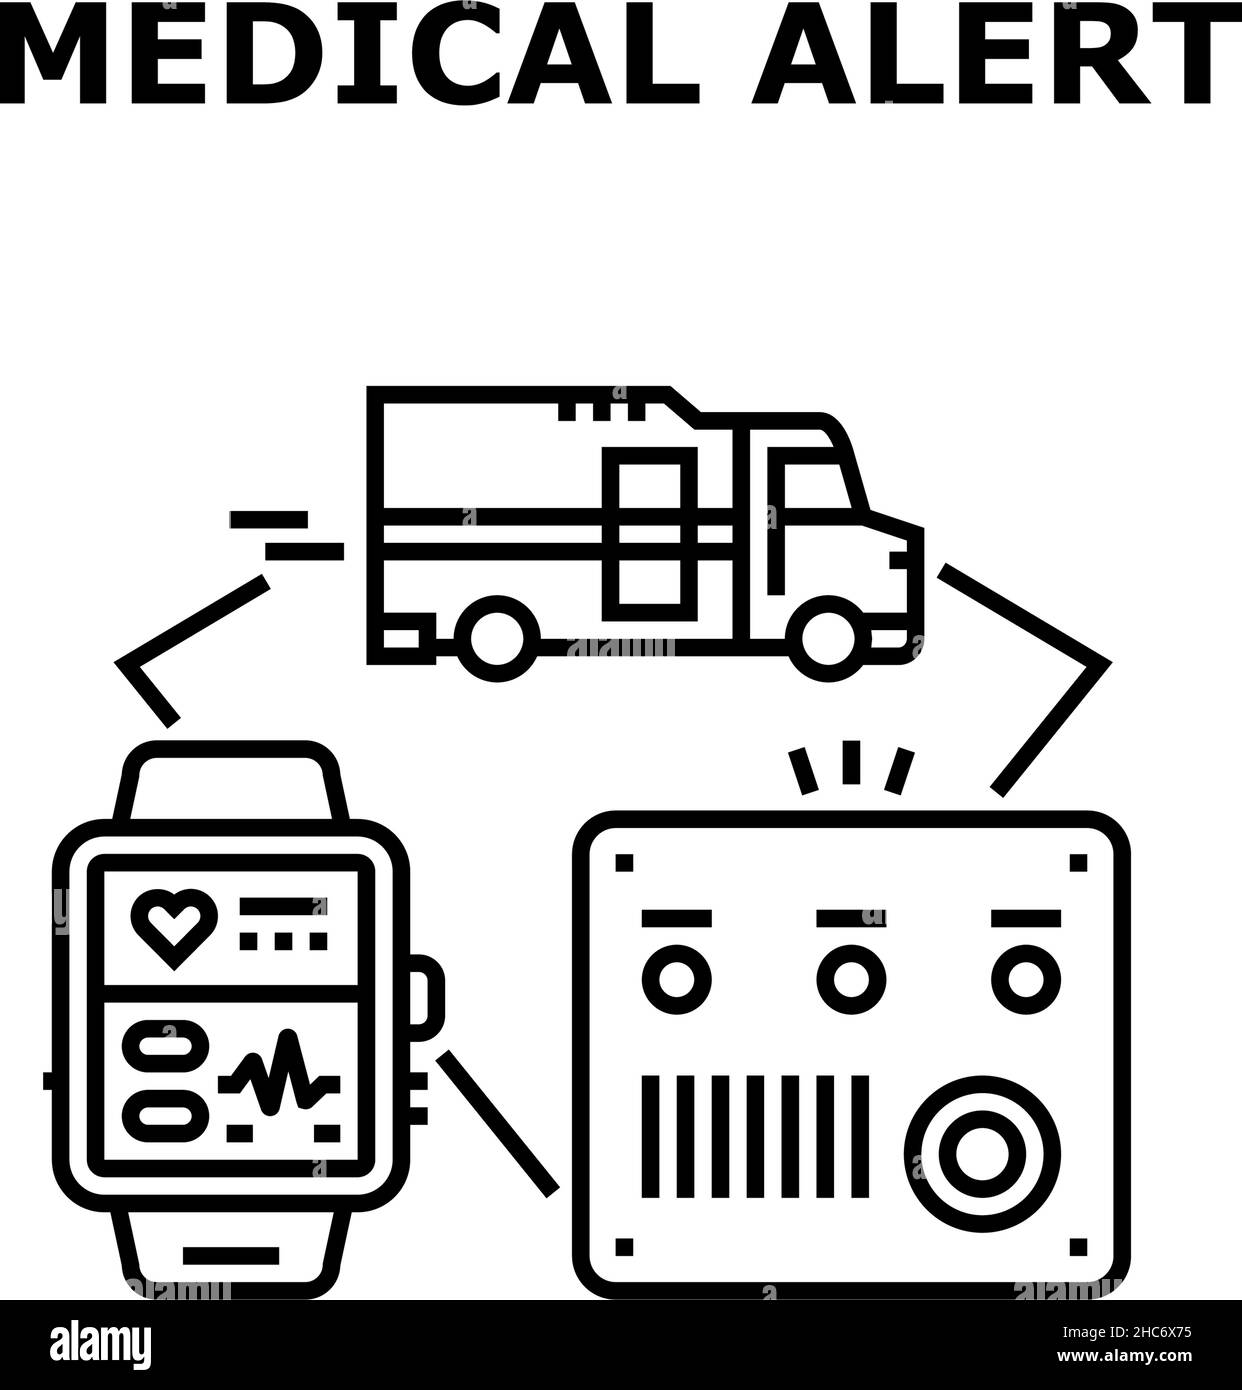 Medical Alert Vector Concept Black Illustration Stock Vector